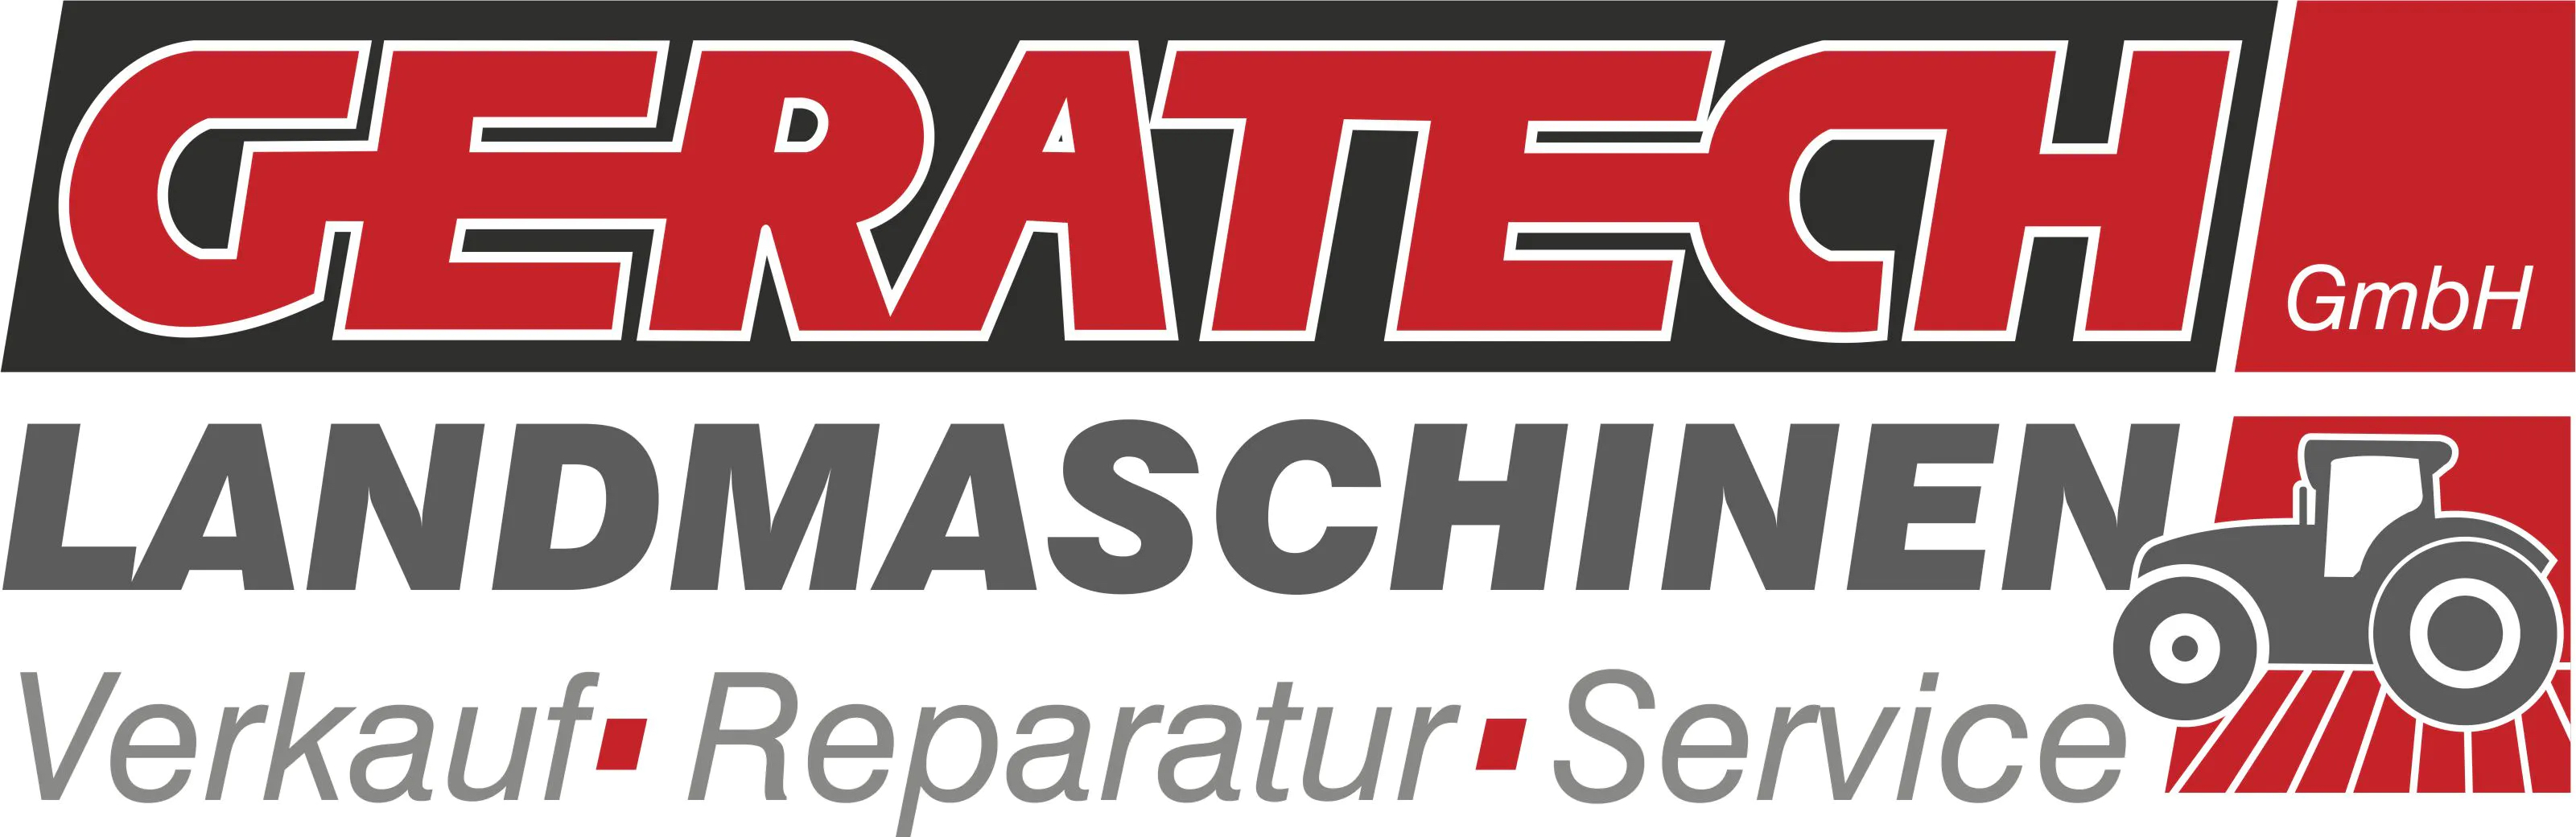 GeraTech GmbH